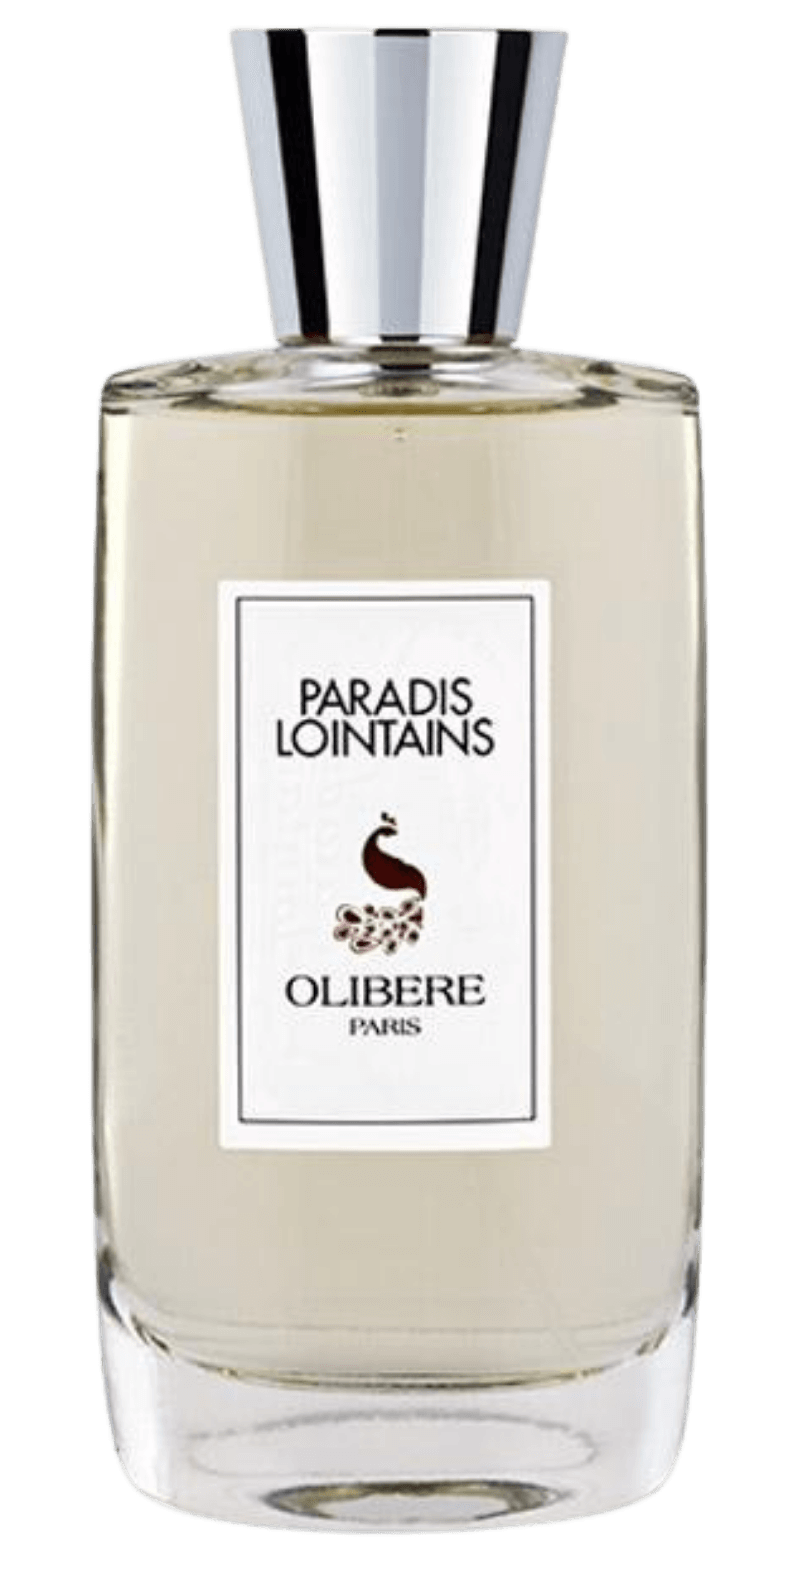 &#39;s Olibere Paradis Lointains - Bellini&#39;s Skin and Parfumerie 